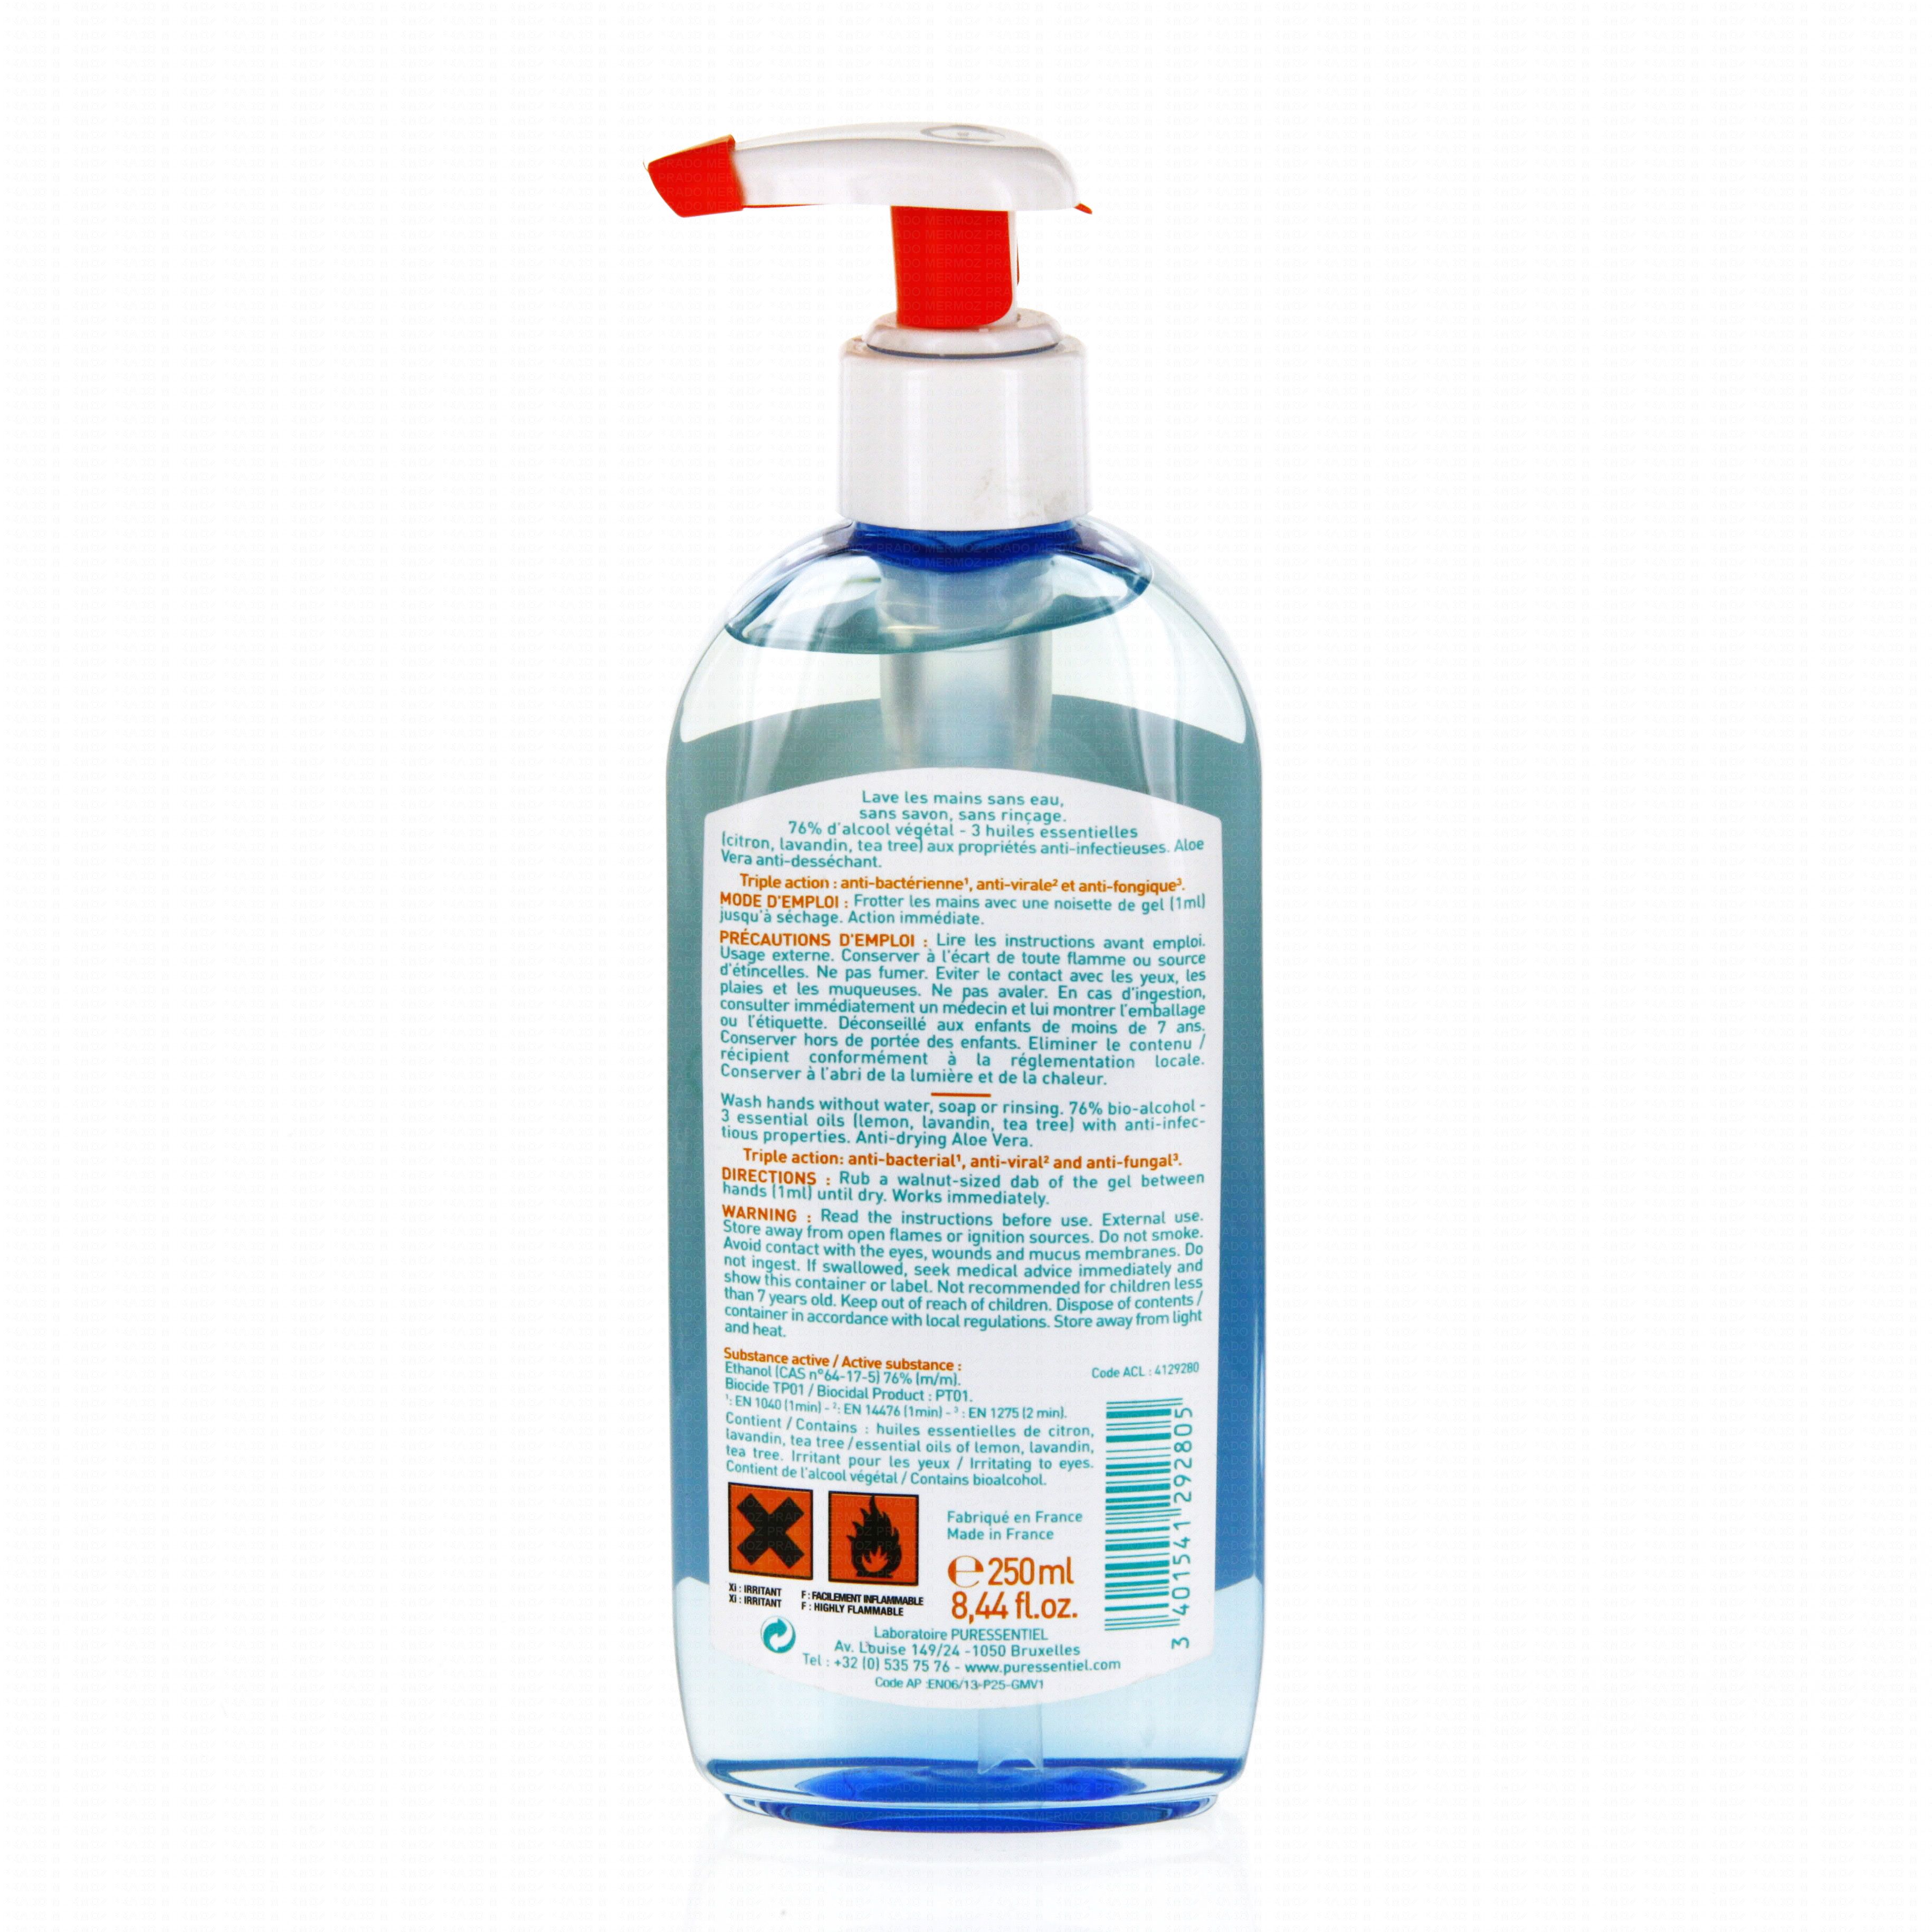 PURESSENTIEL Huiles essentielles pour diffusion parfum de Provence flacon  30ml - Pharmacie Prado Mermoz